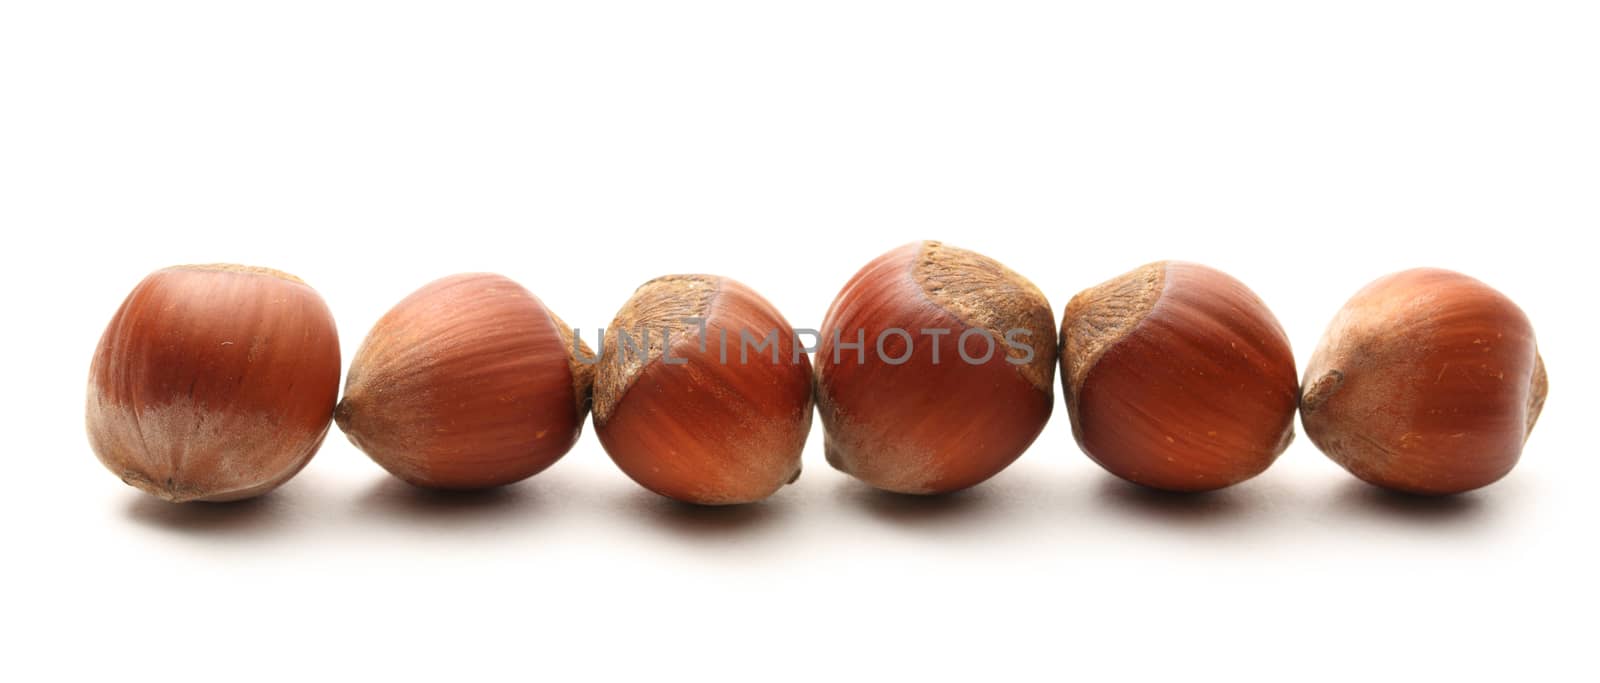 Fresh hazelnuts in line by Garsya